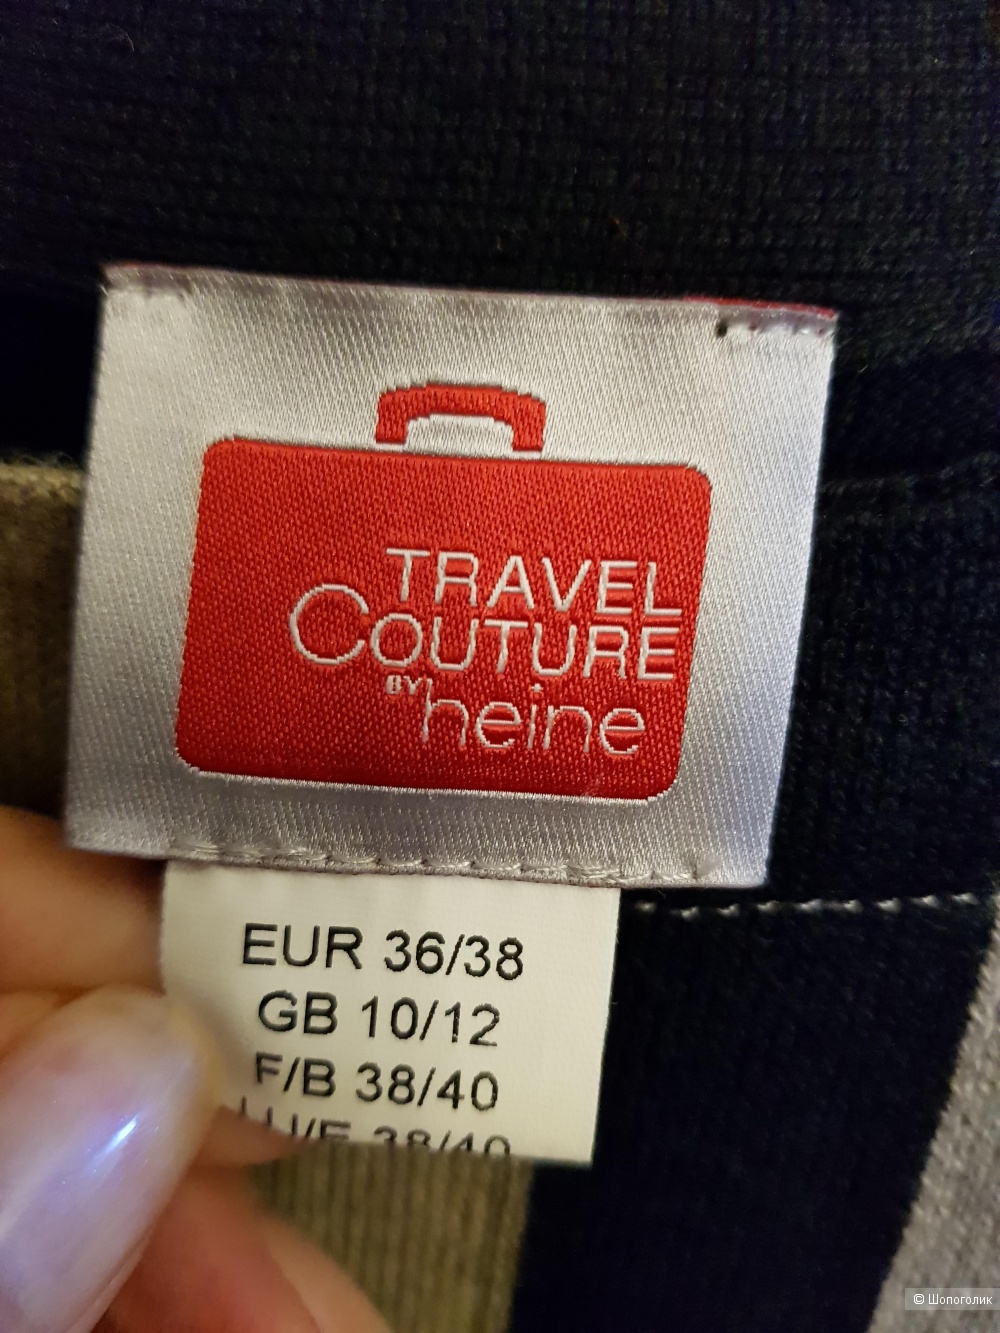 Джемпер Travel couture by Heine, 44-46 размер